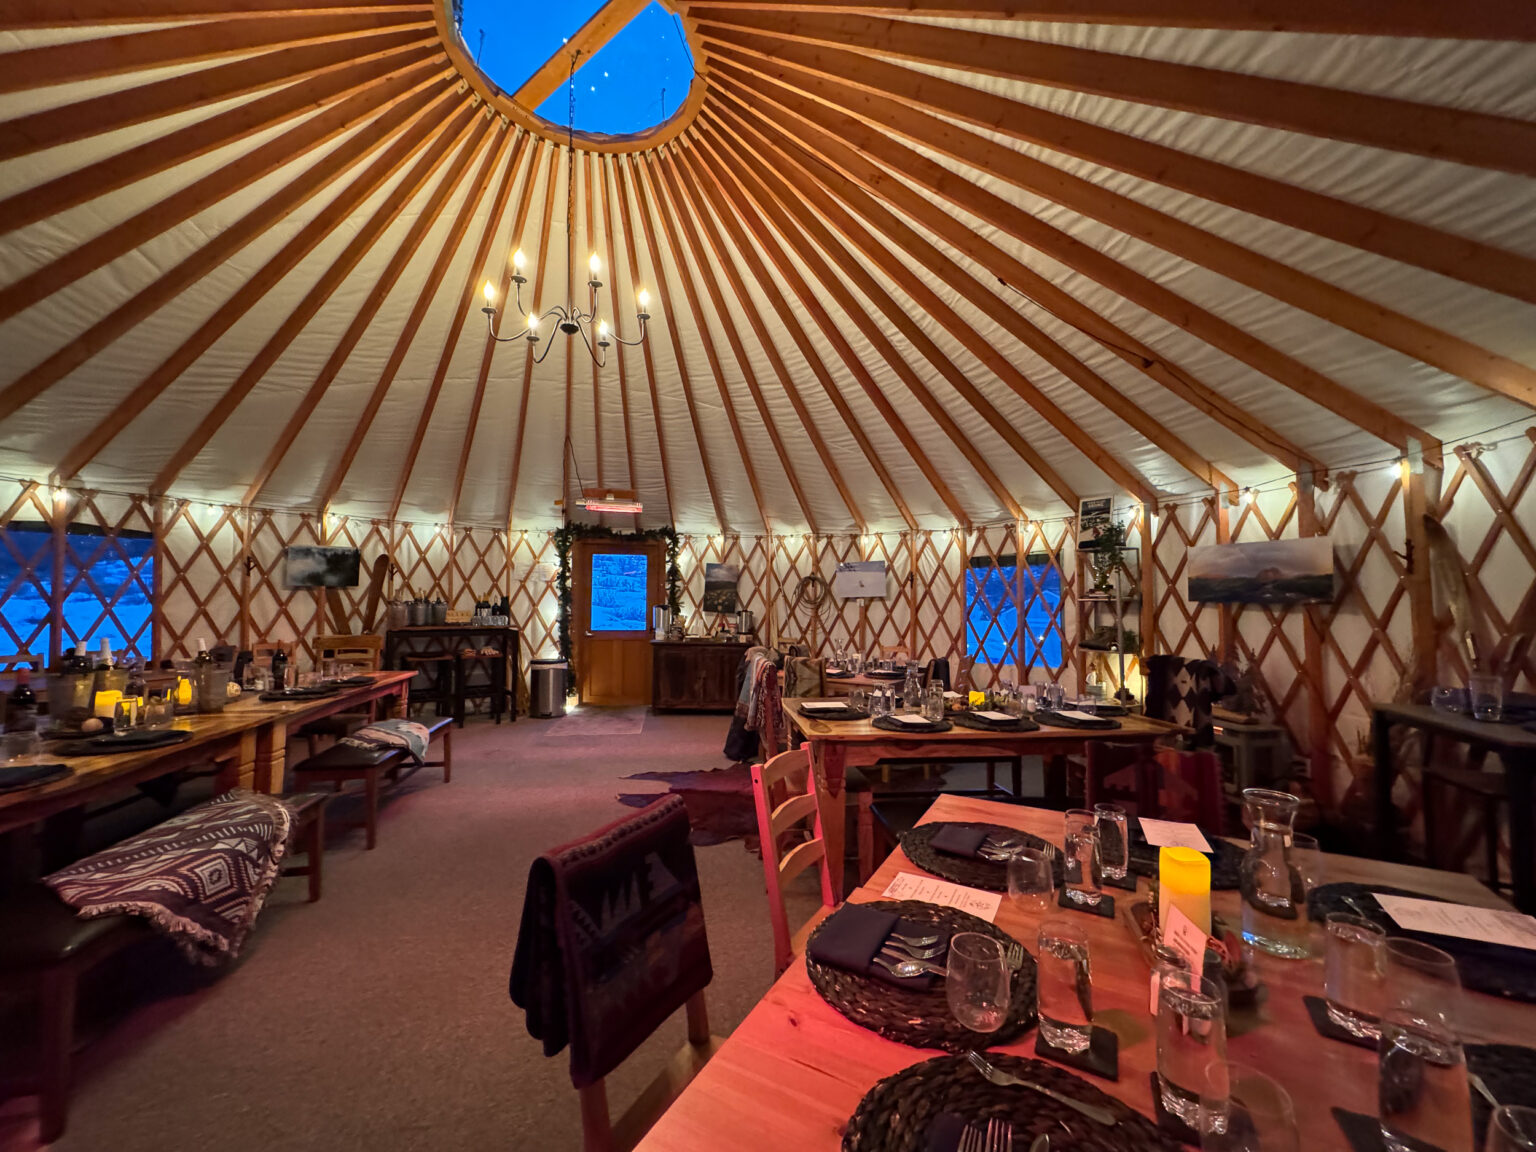 Snowshoe to yurt dinner Park City Midway Utah